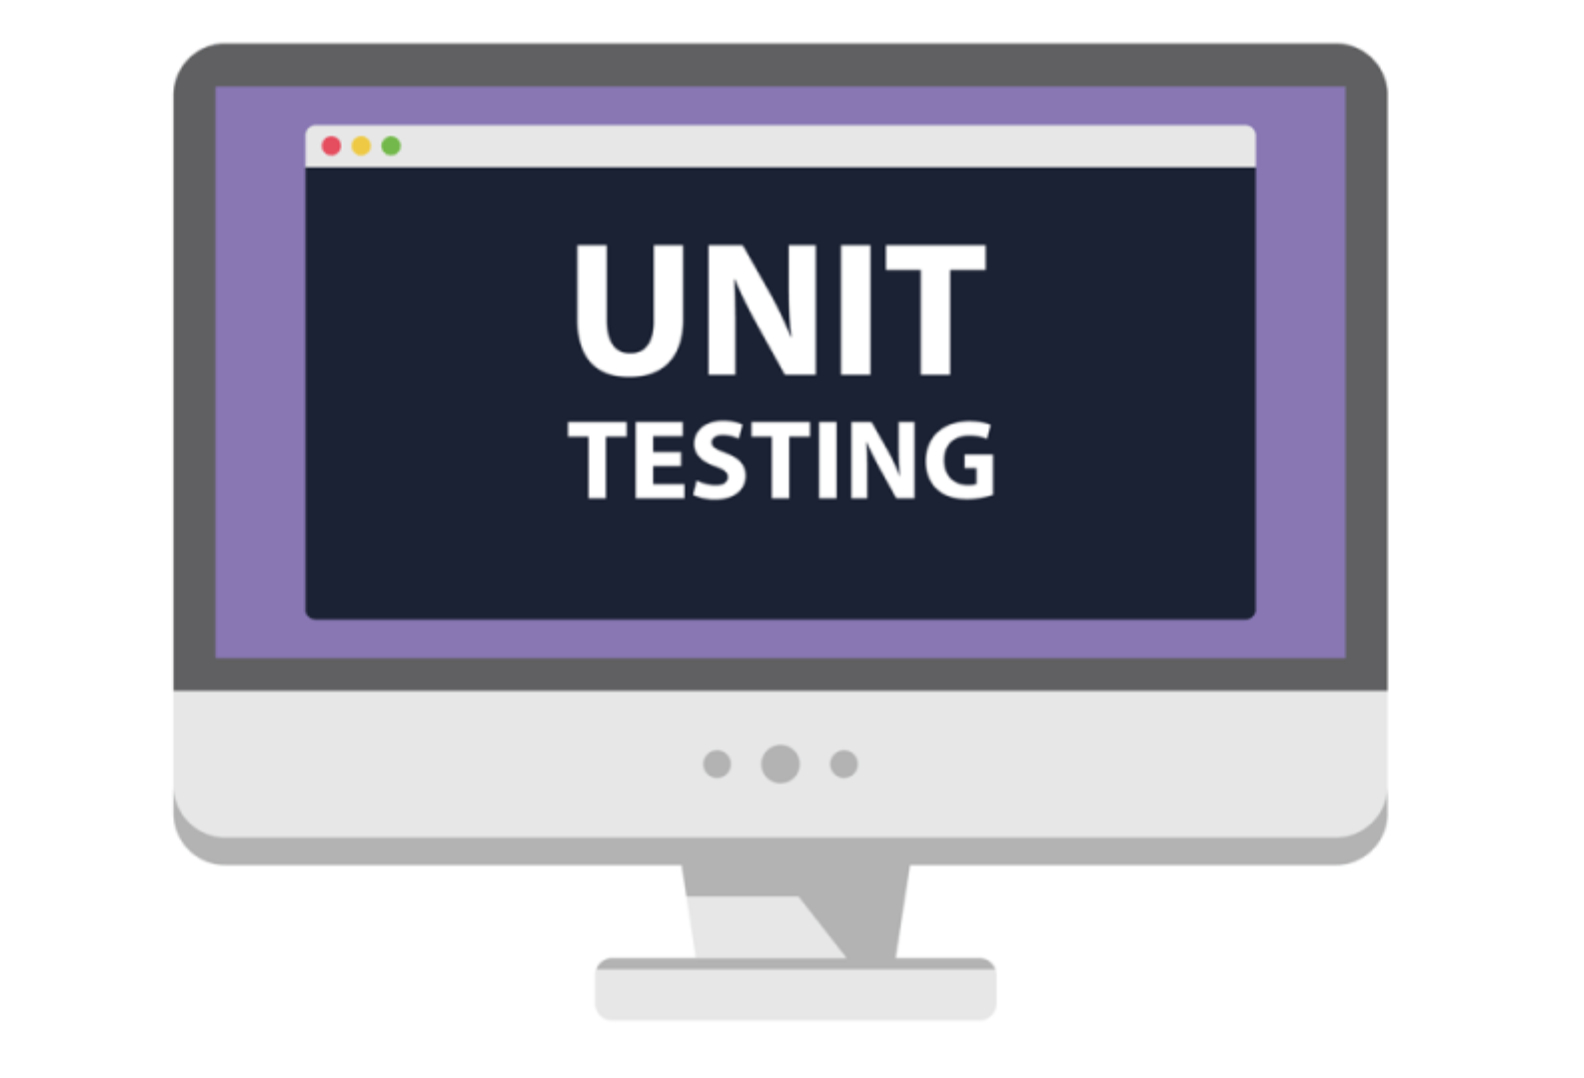 Unit testing